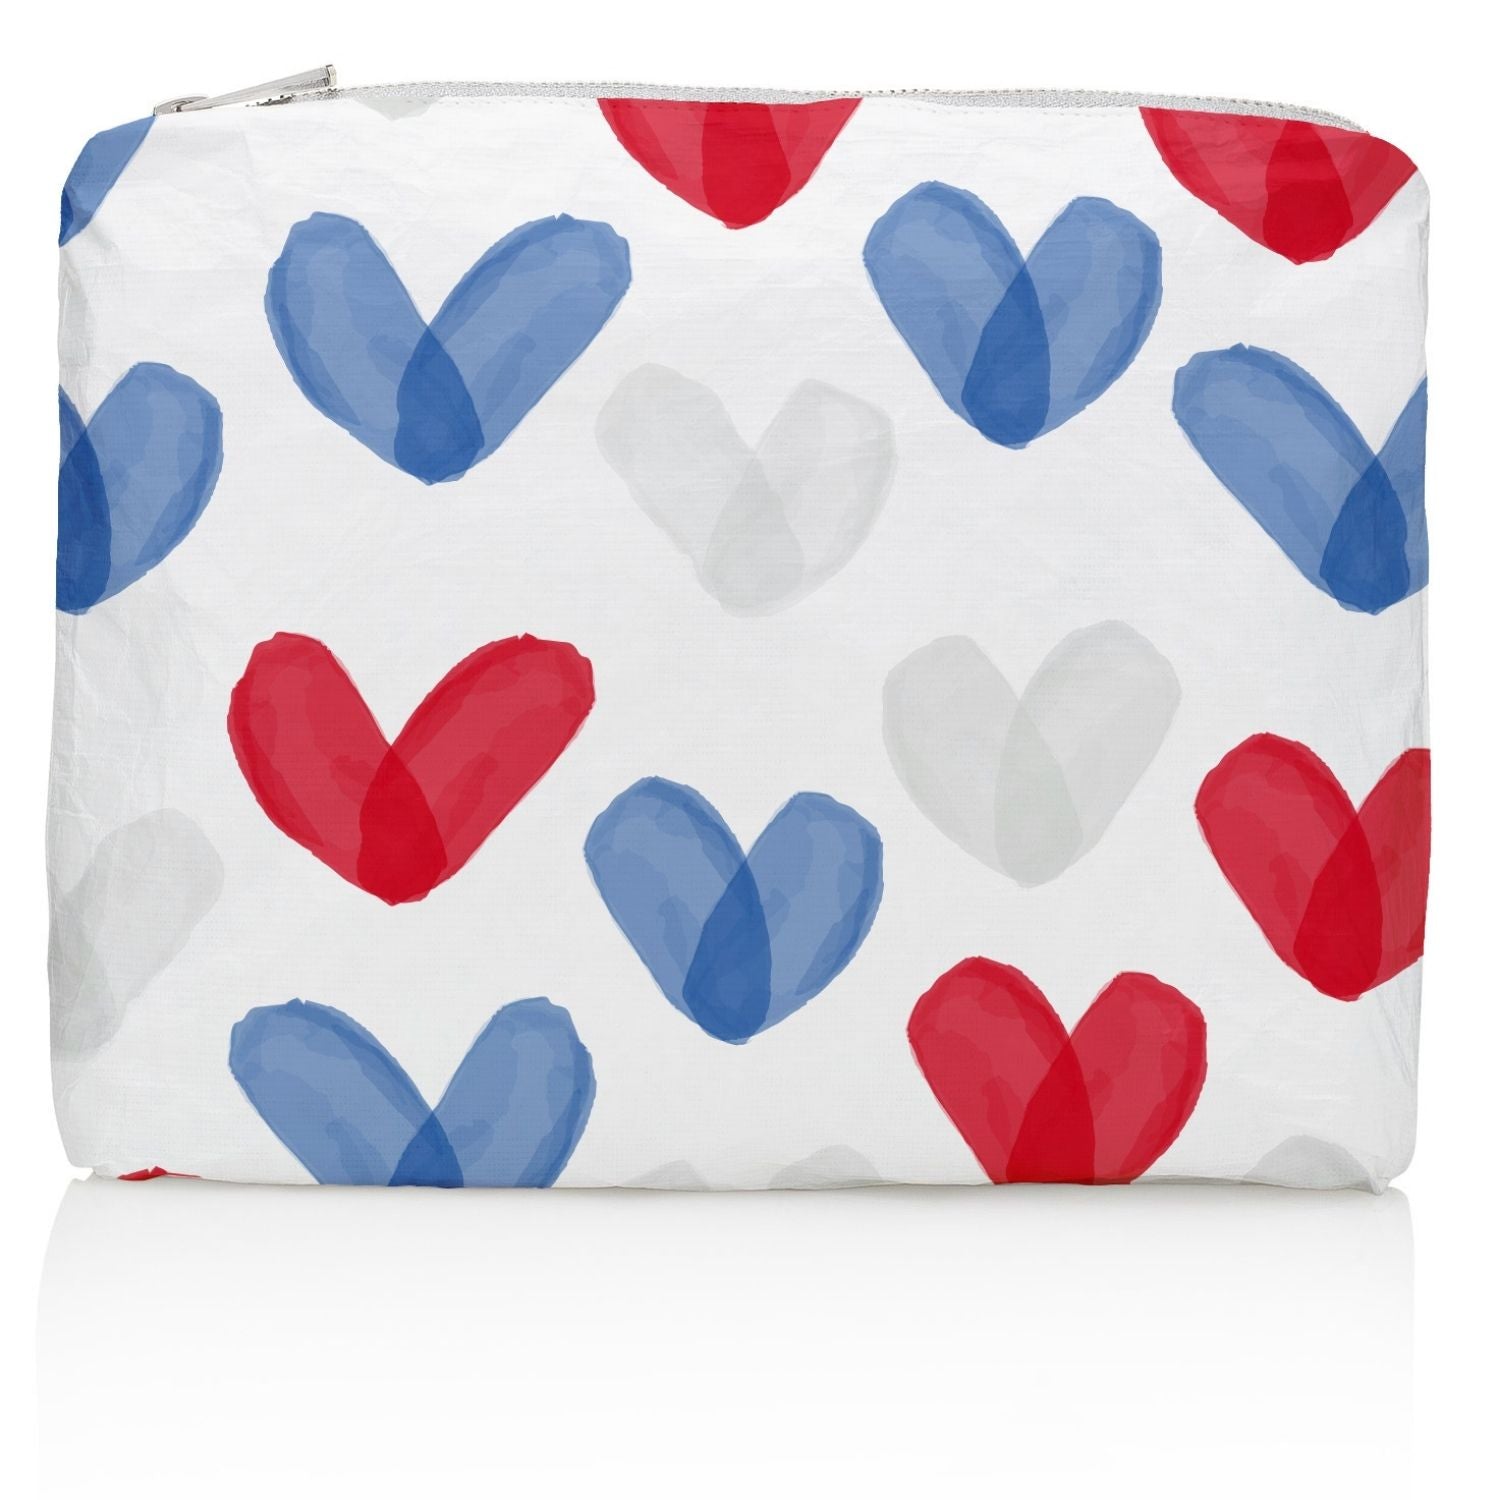 Medium Zipper Pack in the "Language of Love" Red, White, & Blue Heart Print